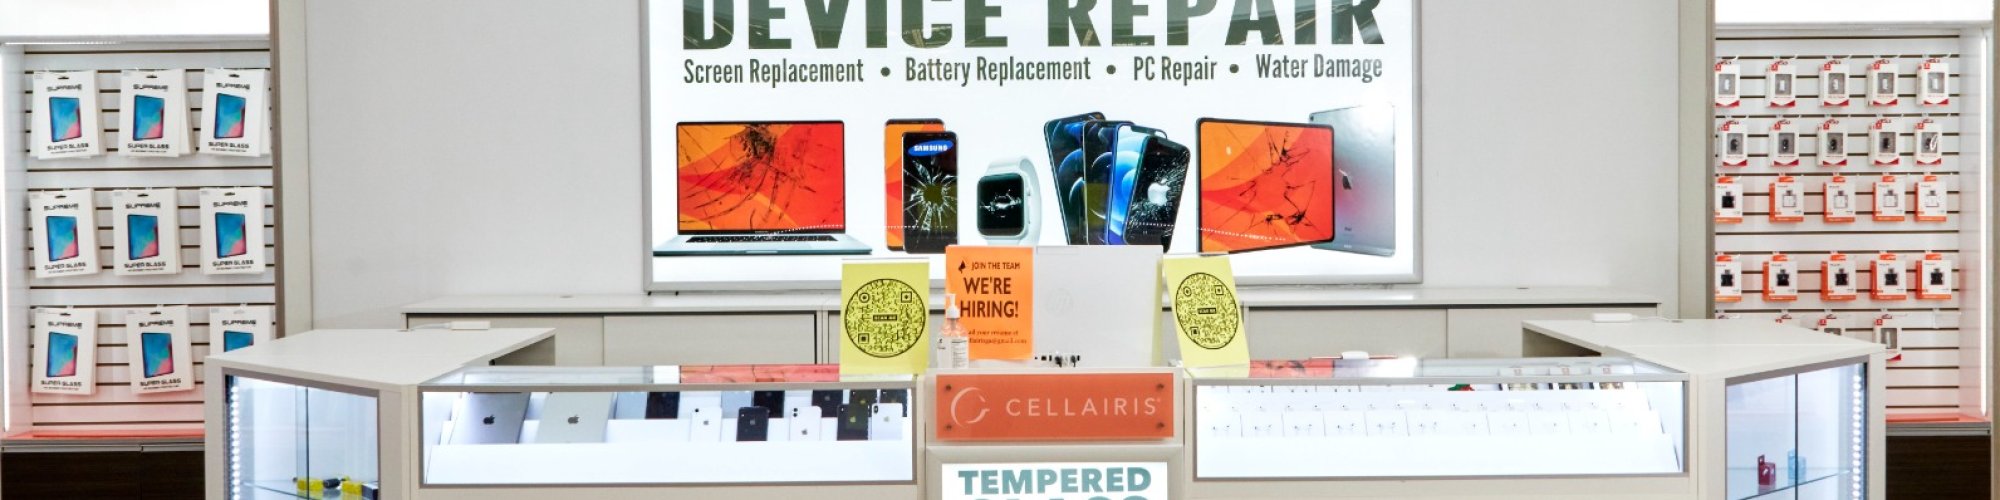 Cellairis Phone Repair Inside Walmart - Spring